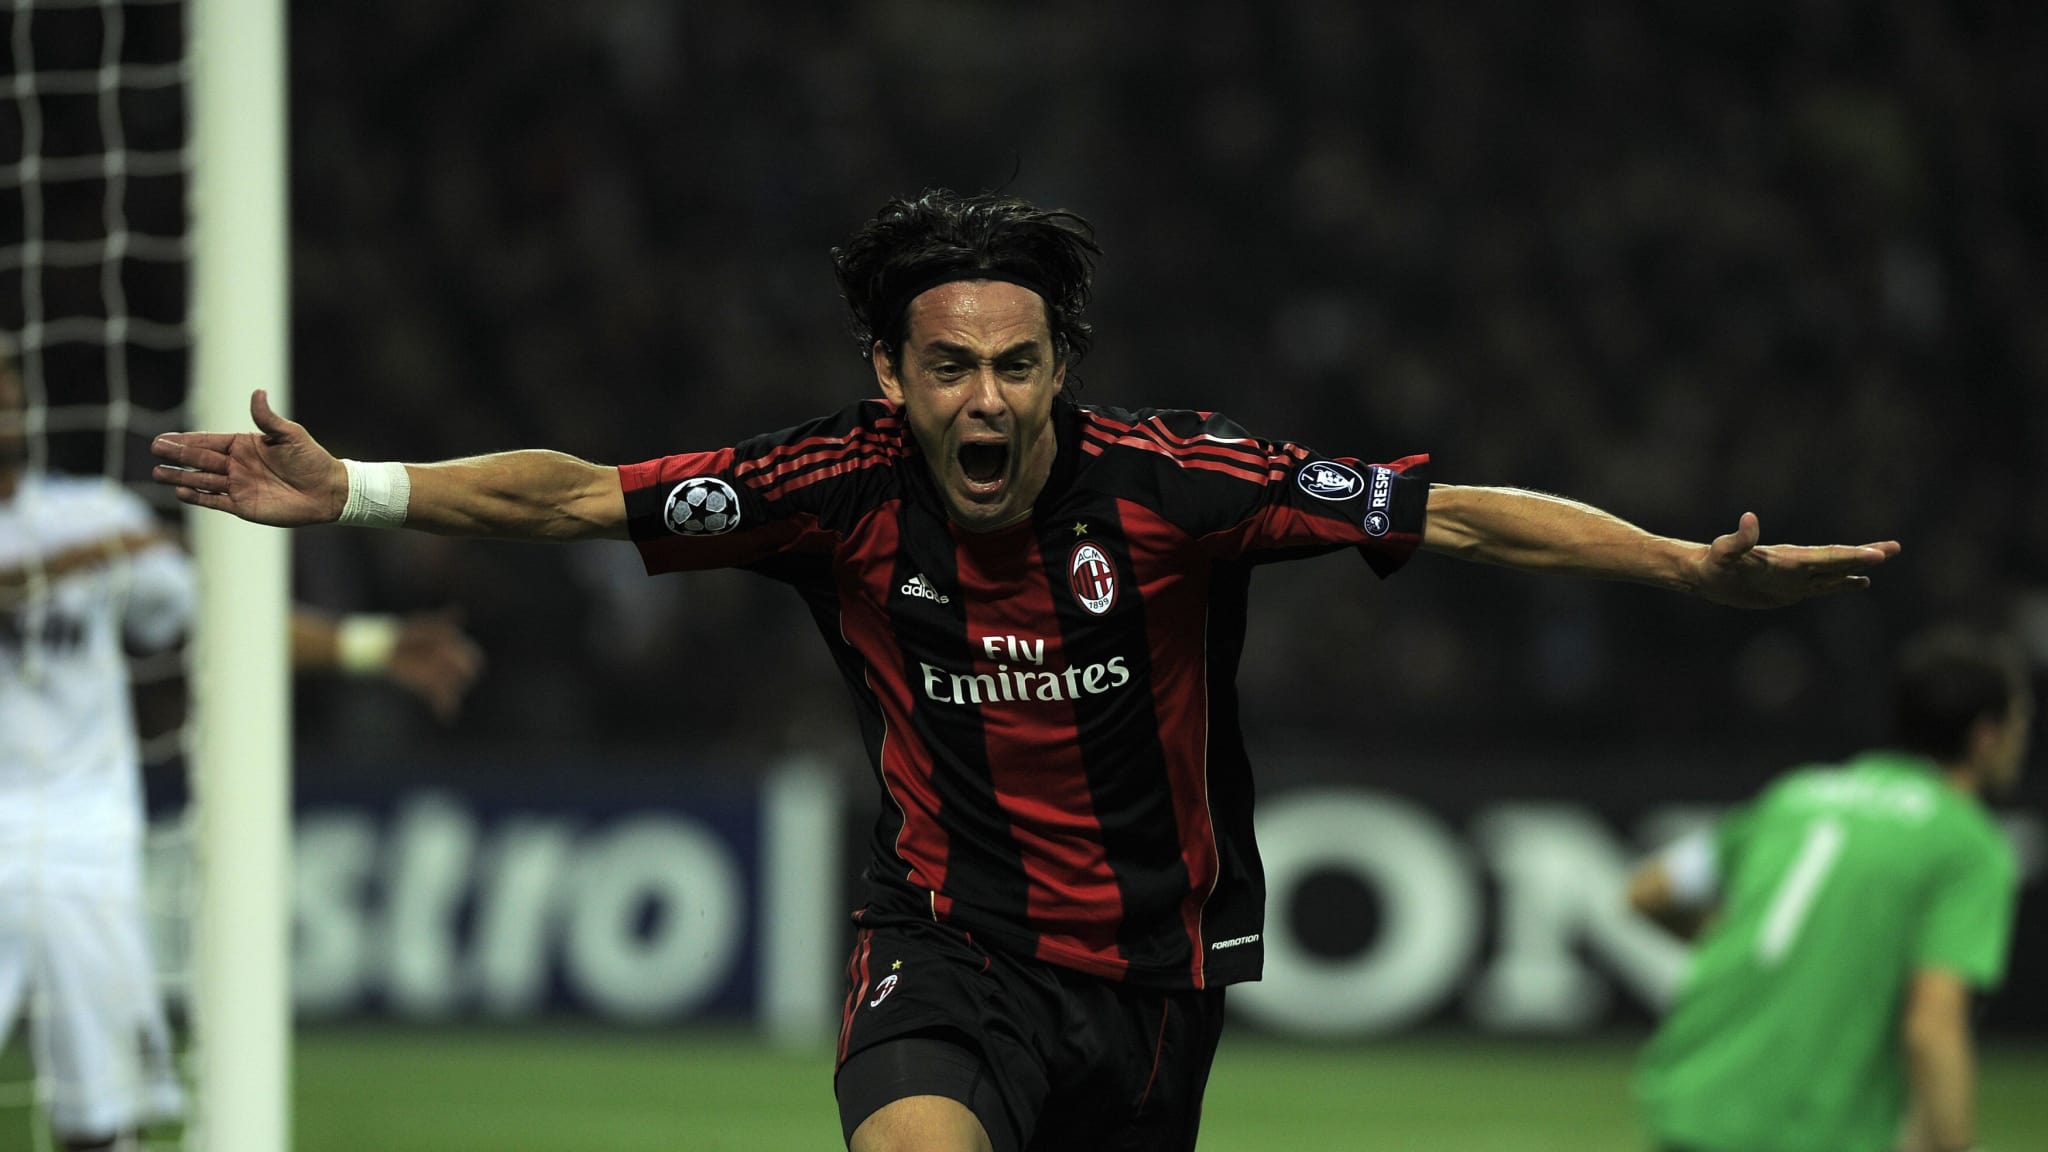 11º - Inzaghi - 46 gols em 81 jogos